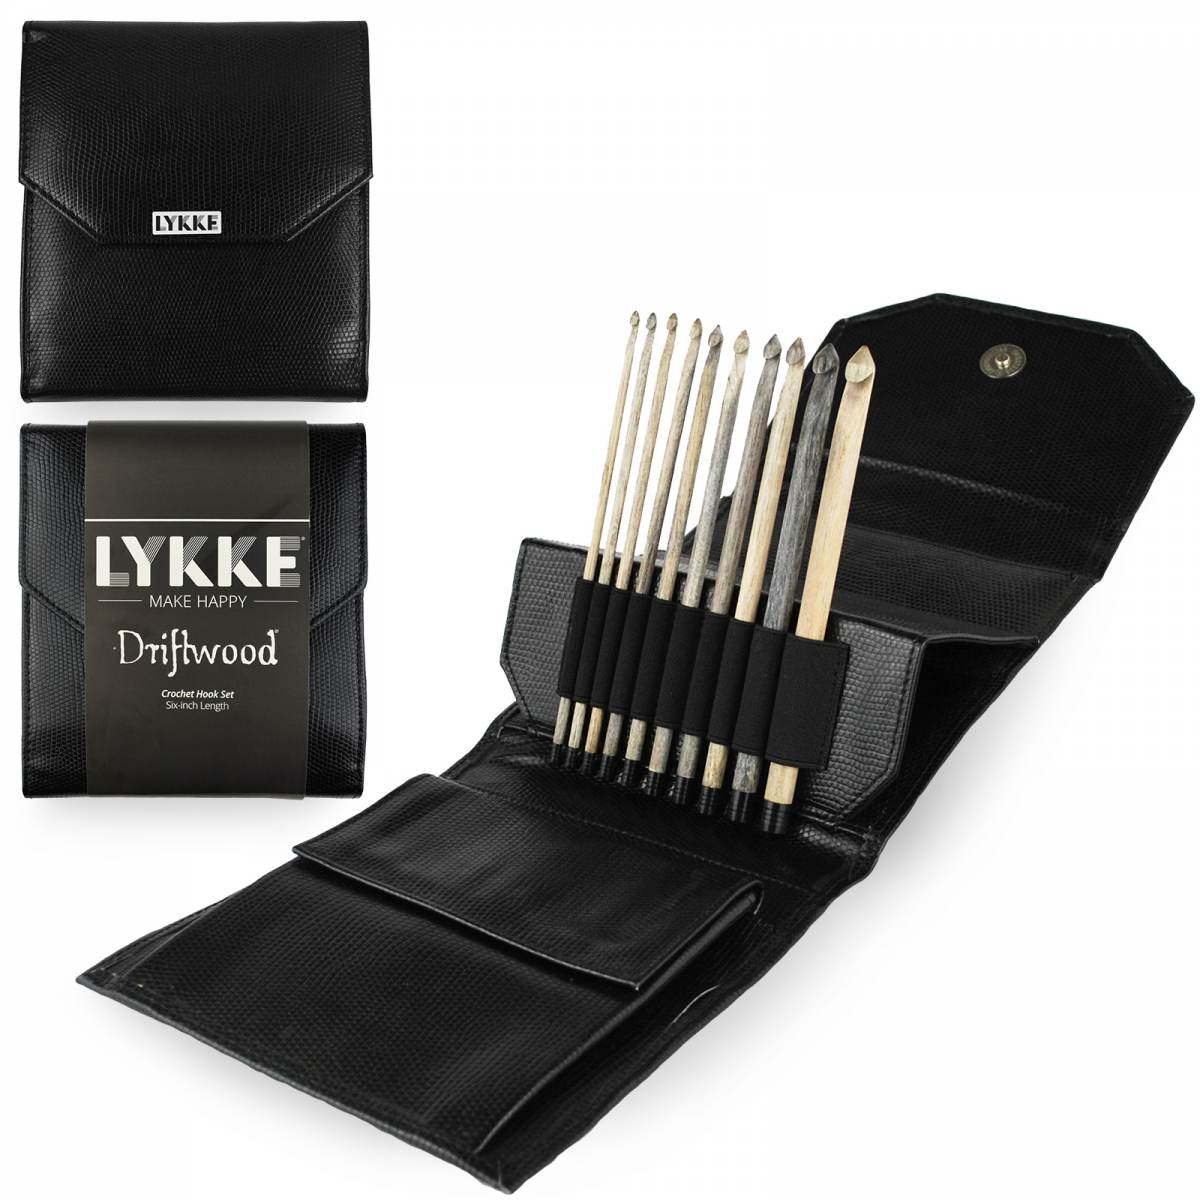 LYKKE Driftwood 6 Crochet Hook Set (Faux Leather Case) – The